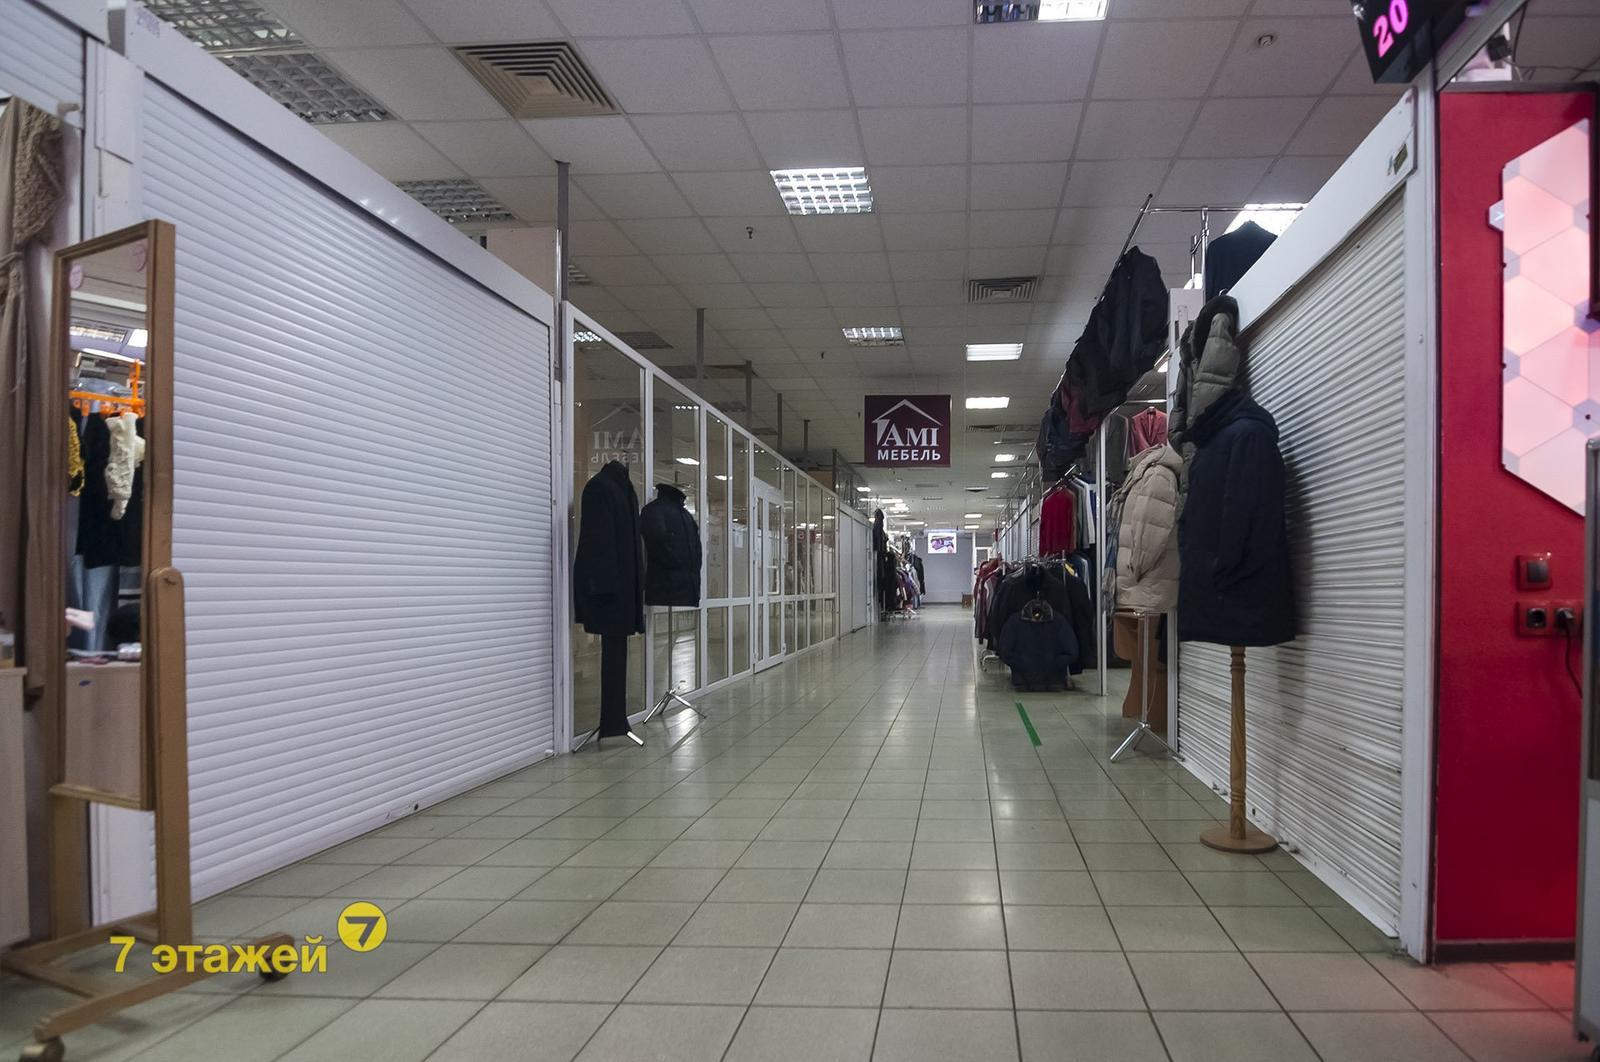 Продажа торговой точки на ул. Куйбышева, д. 40 в Минске, 10000USD - фото 1